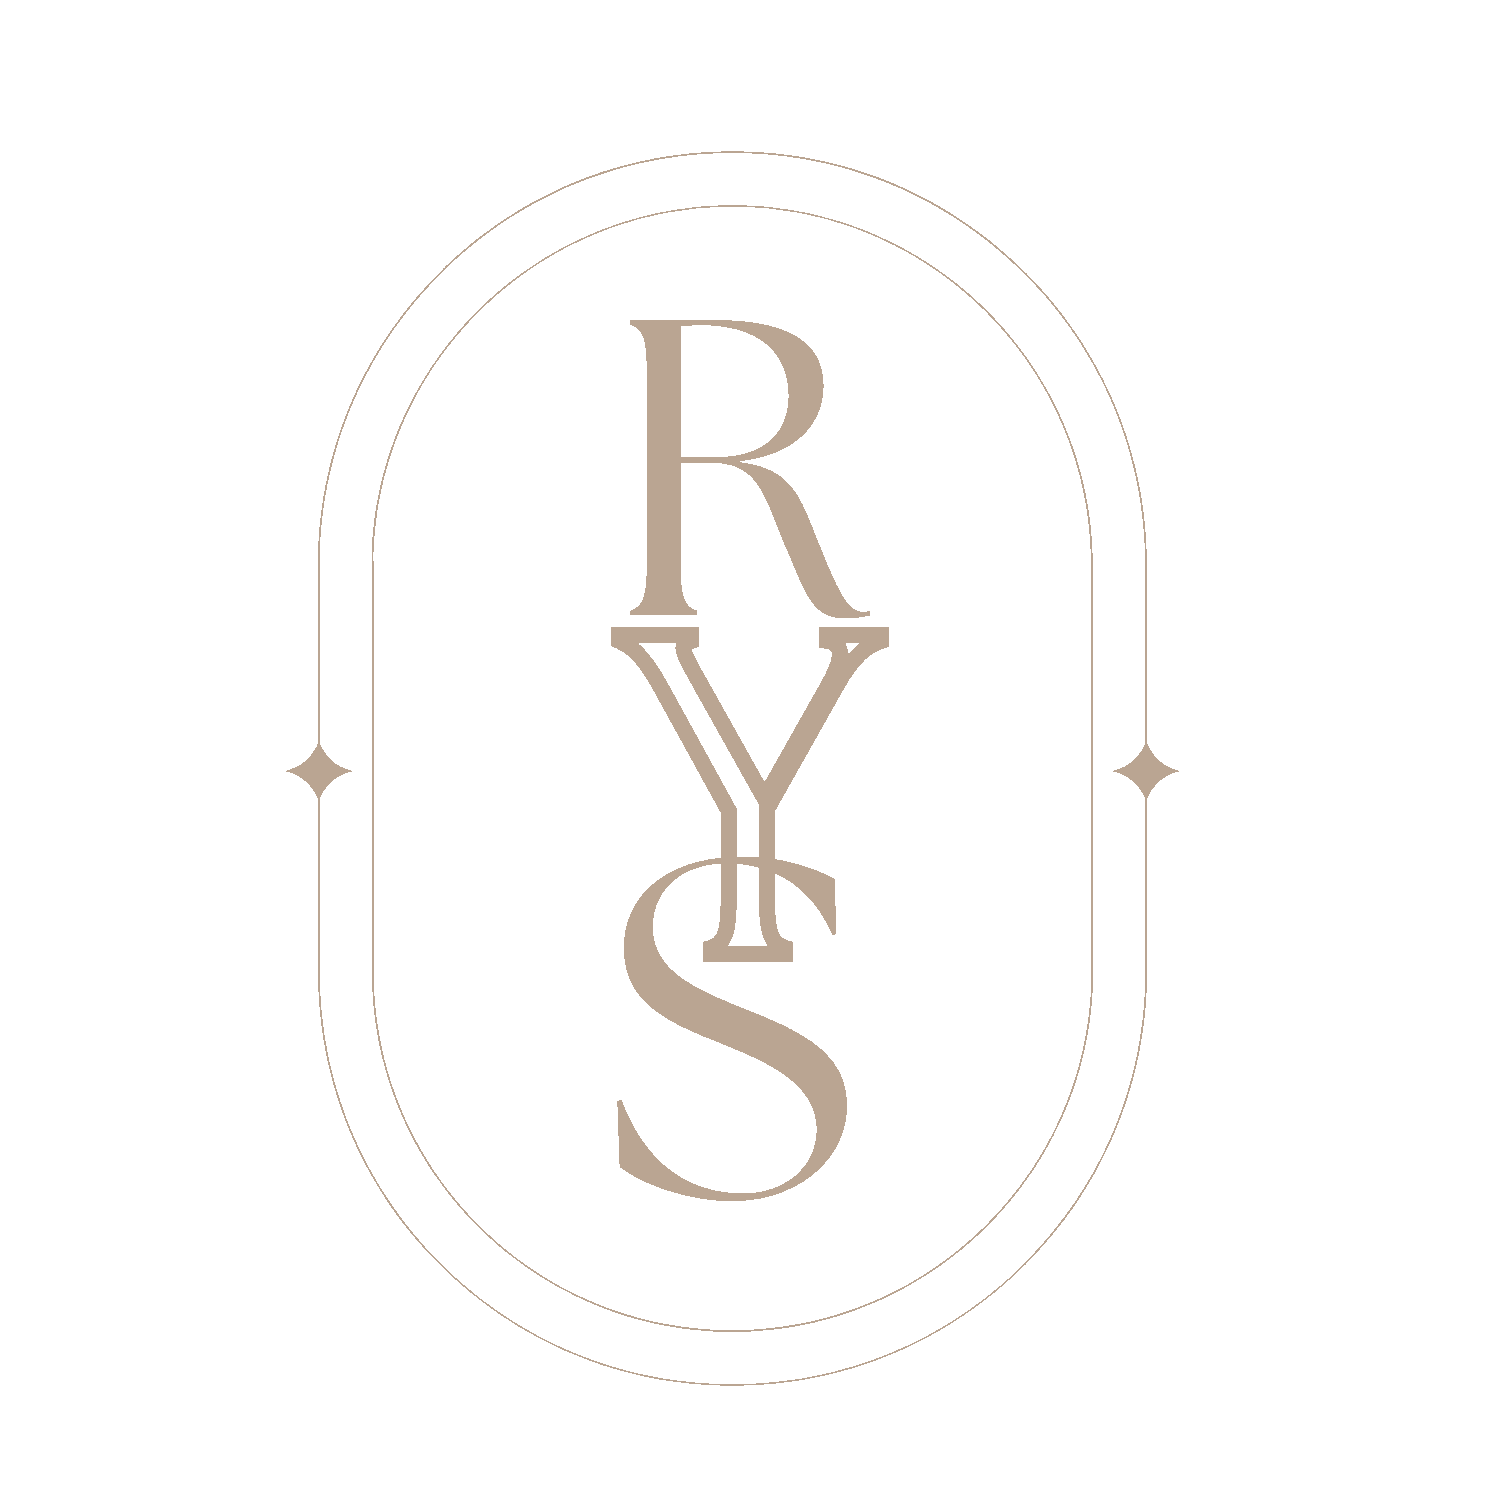 RYS Communication